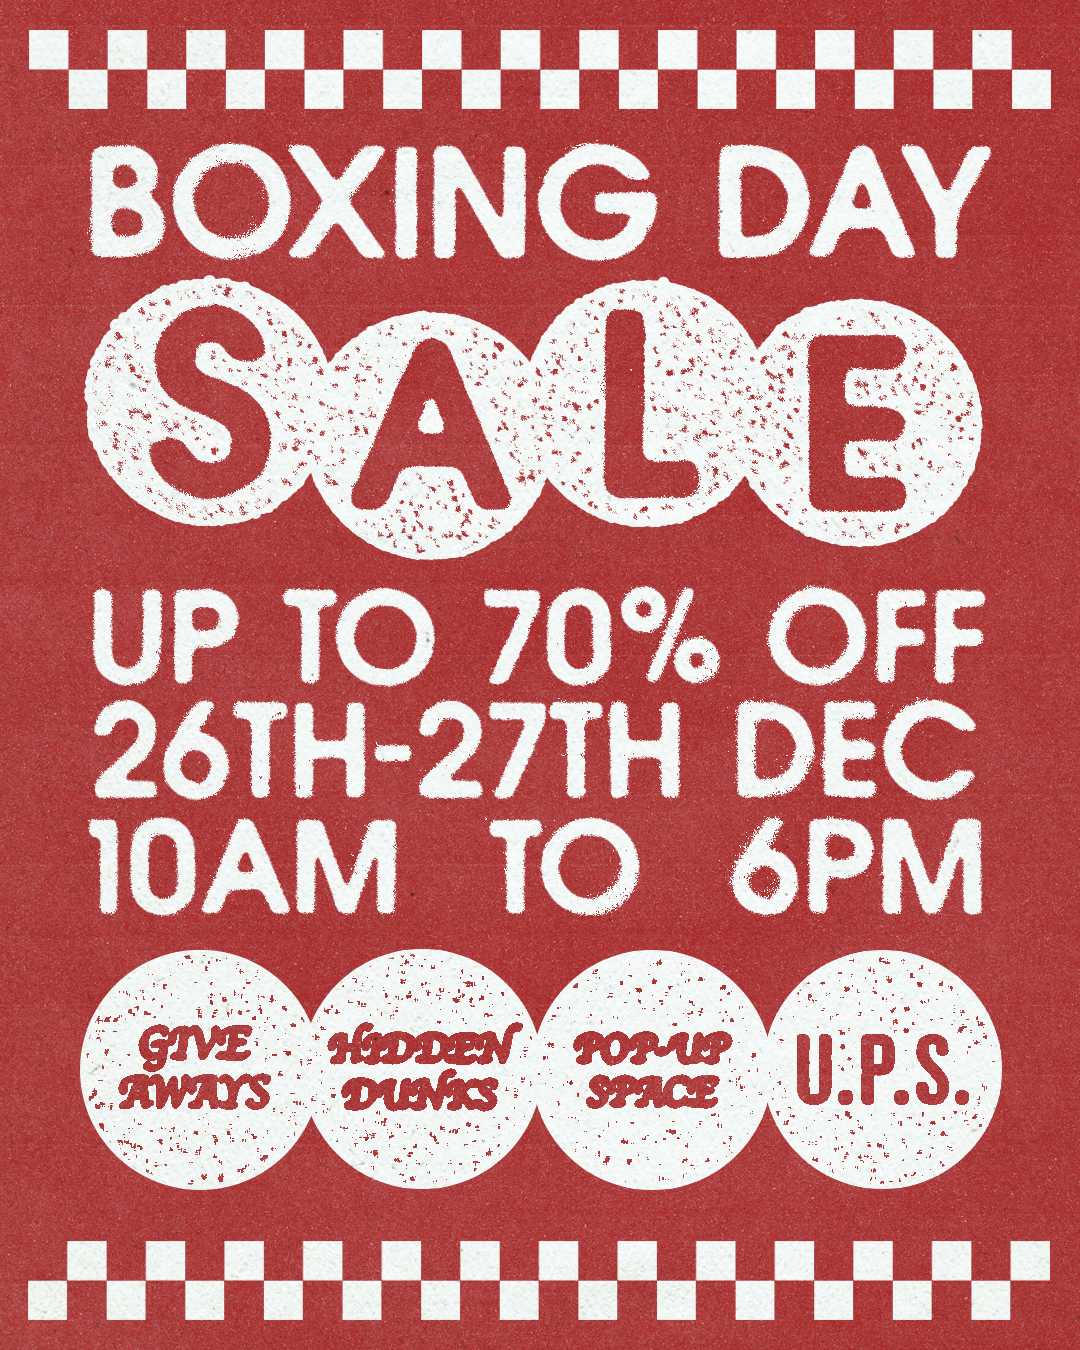 U.P.S. skate shop boxing day sale 